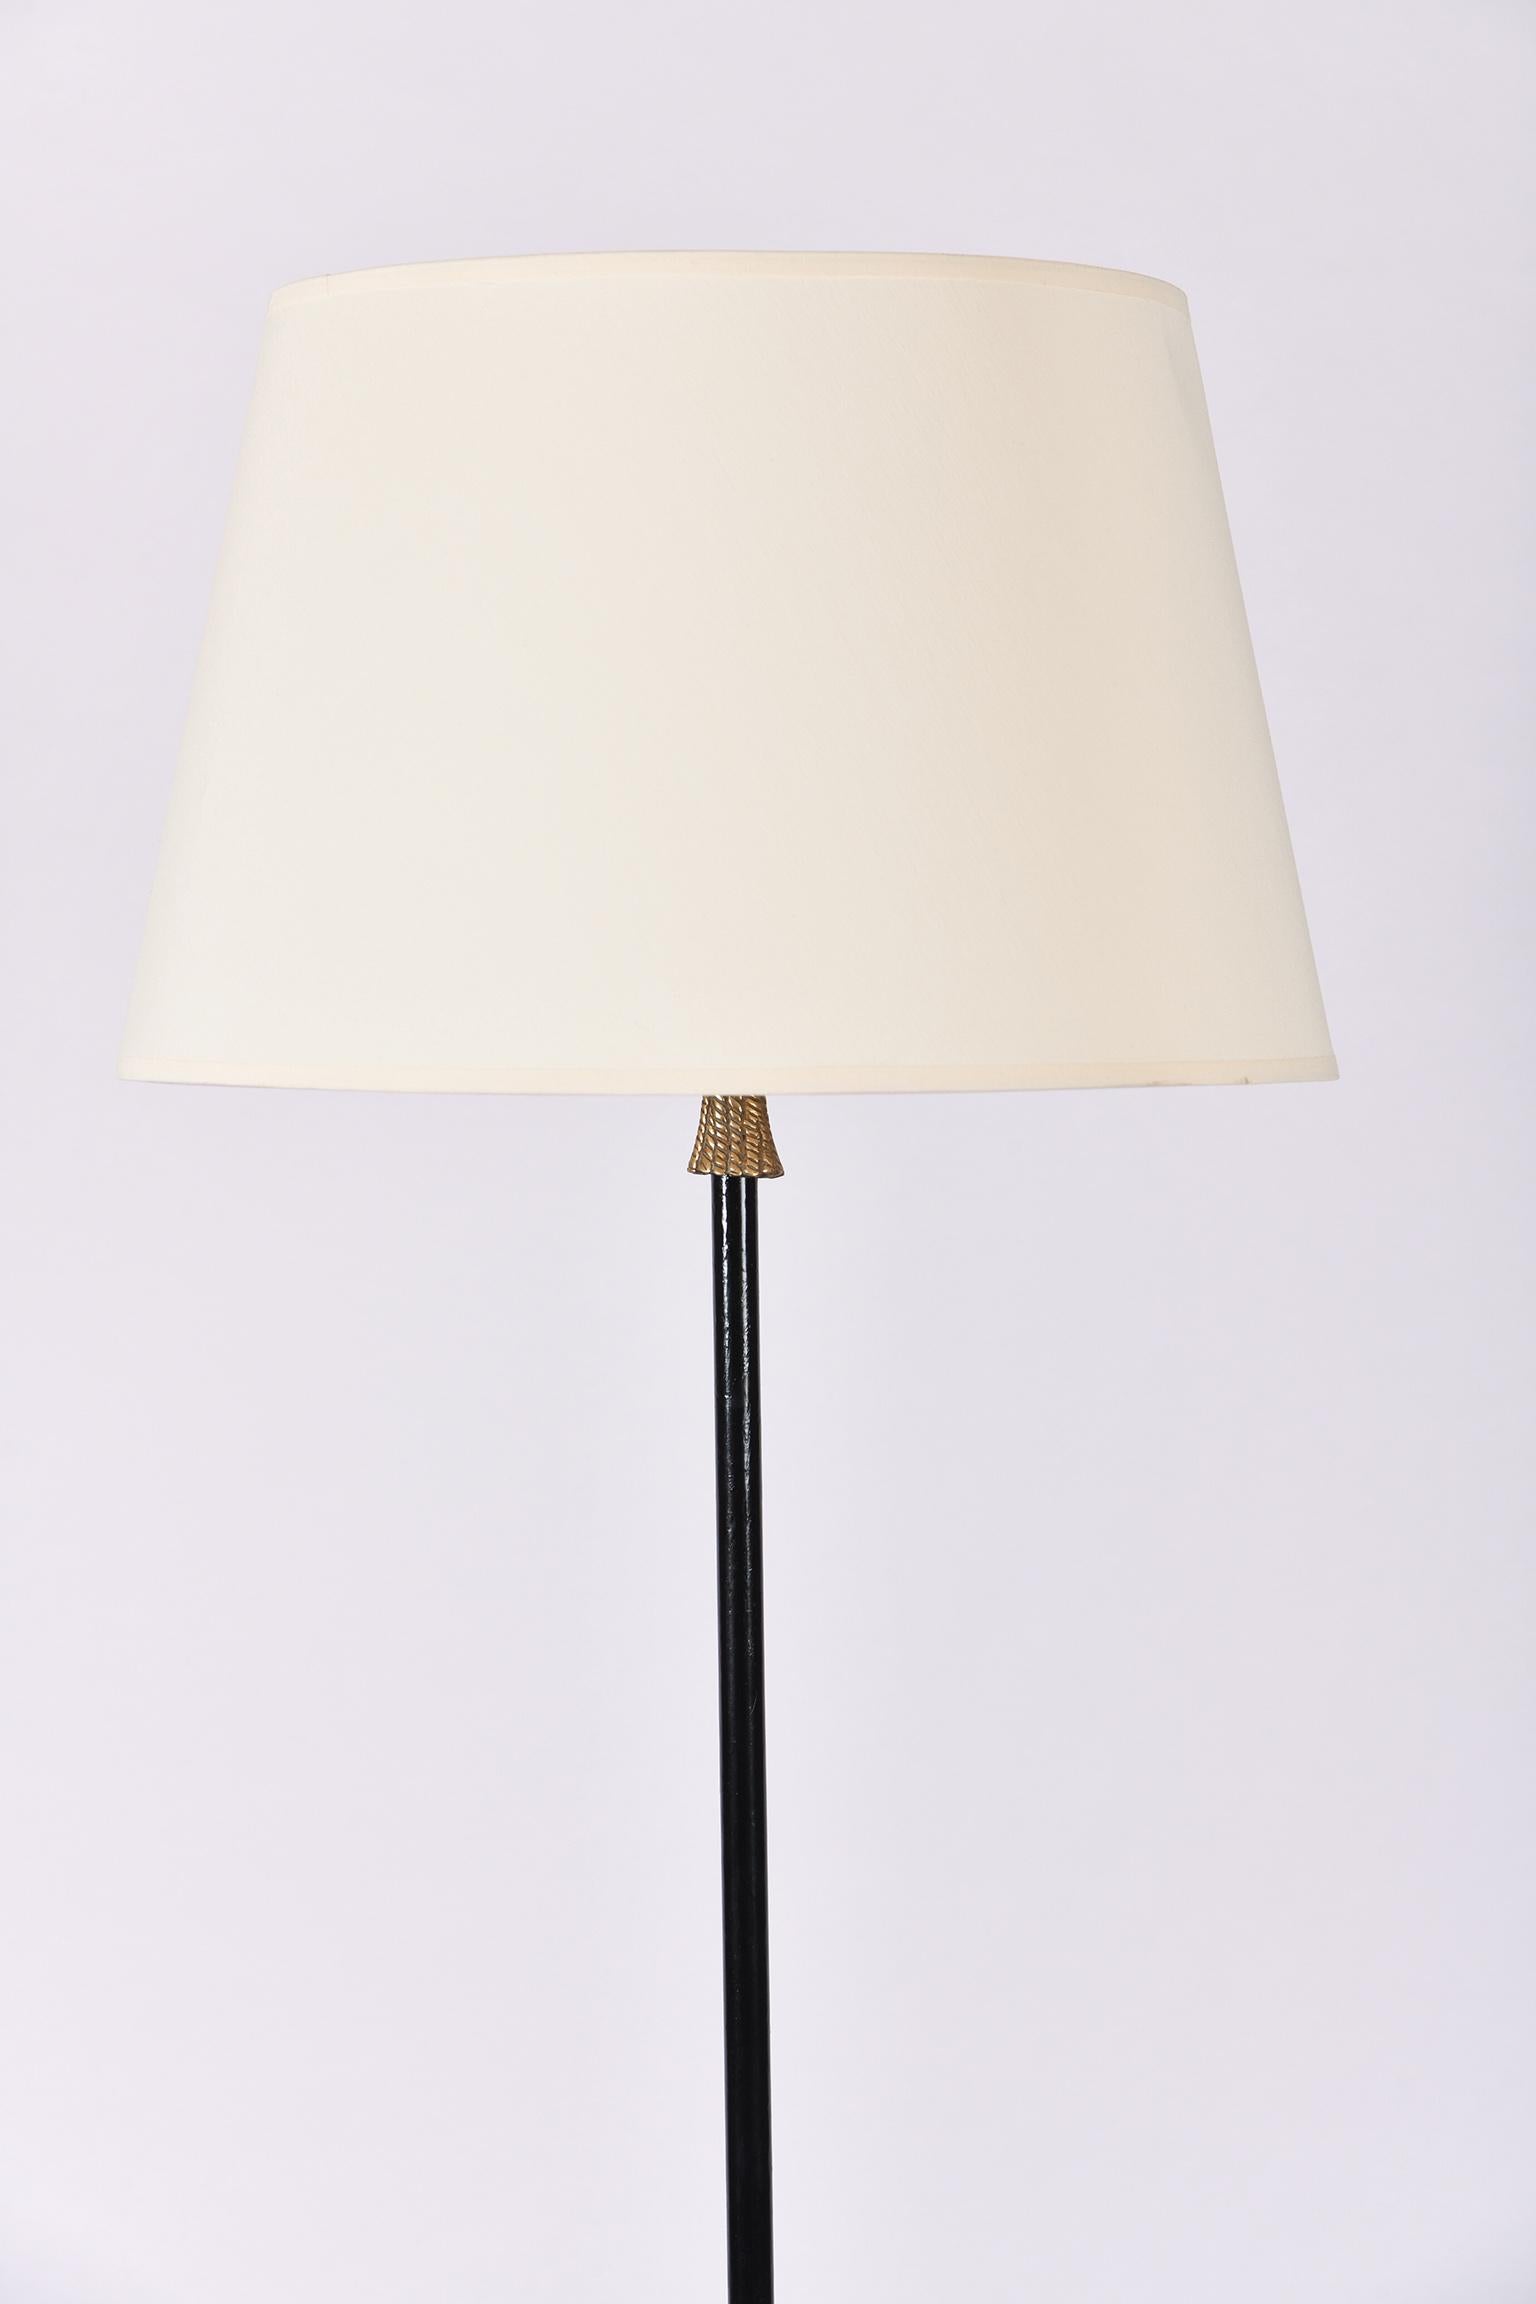 Mid-Century Modern 1950s Black and Brass Floor Lamp